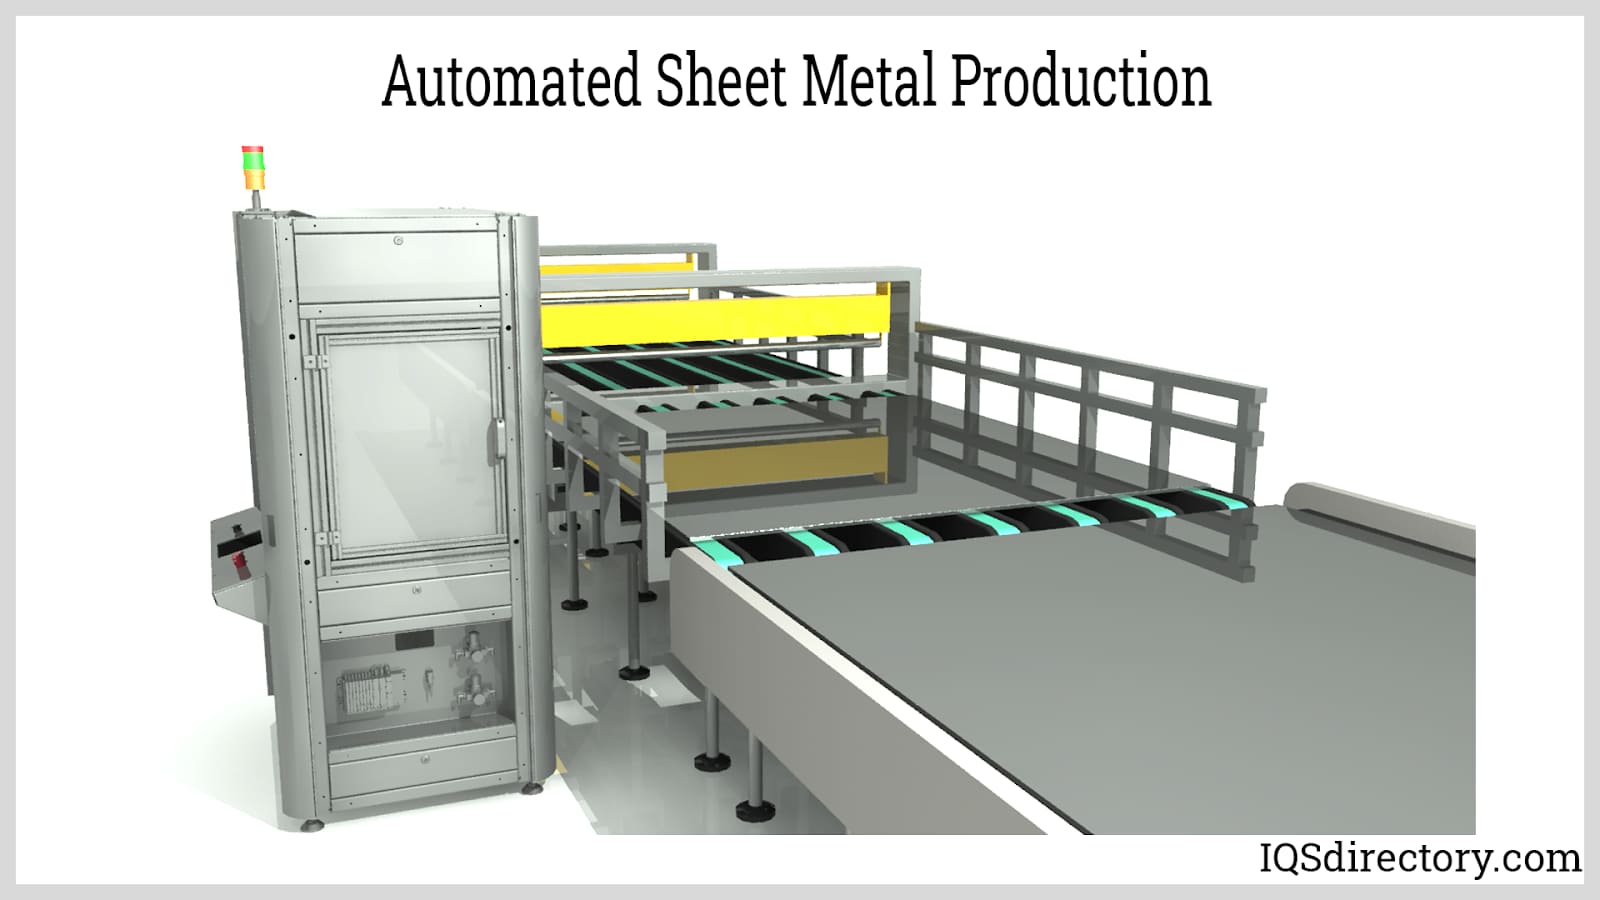 Autmated Sheet Metal Production